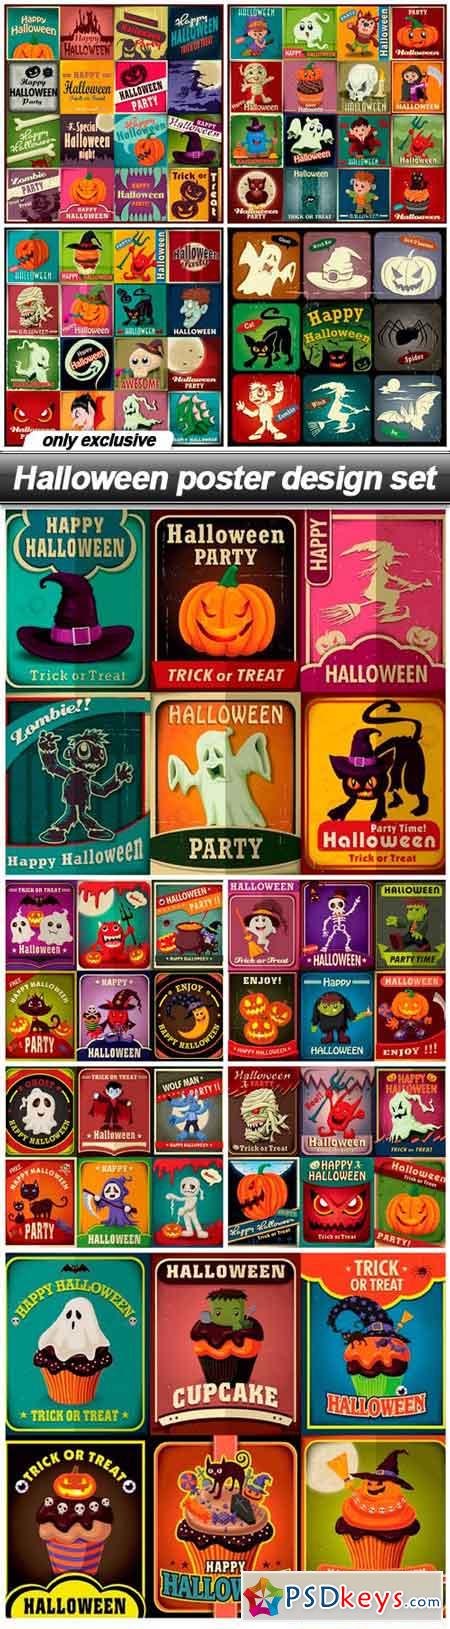 Halloween poster design set - 10 EPS